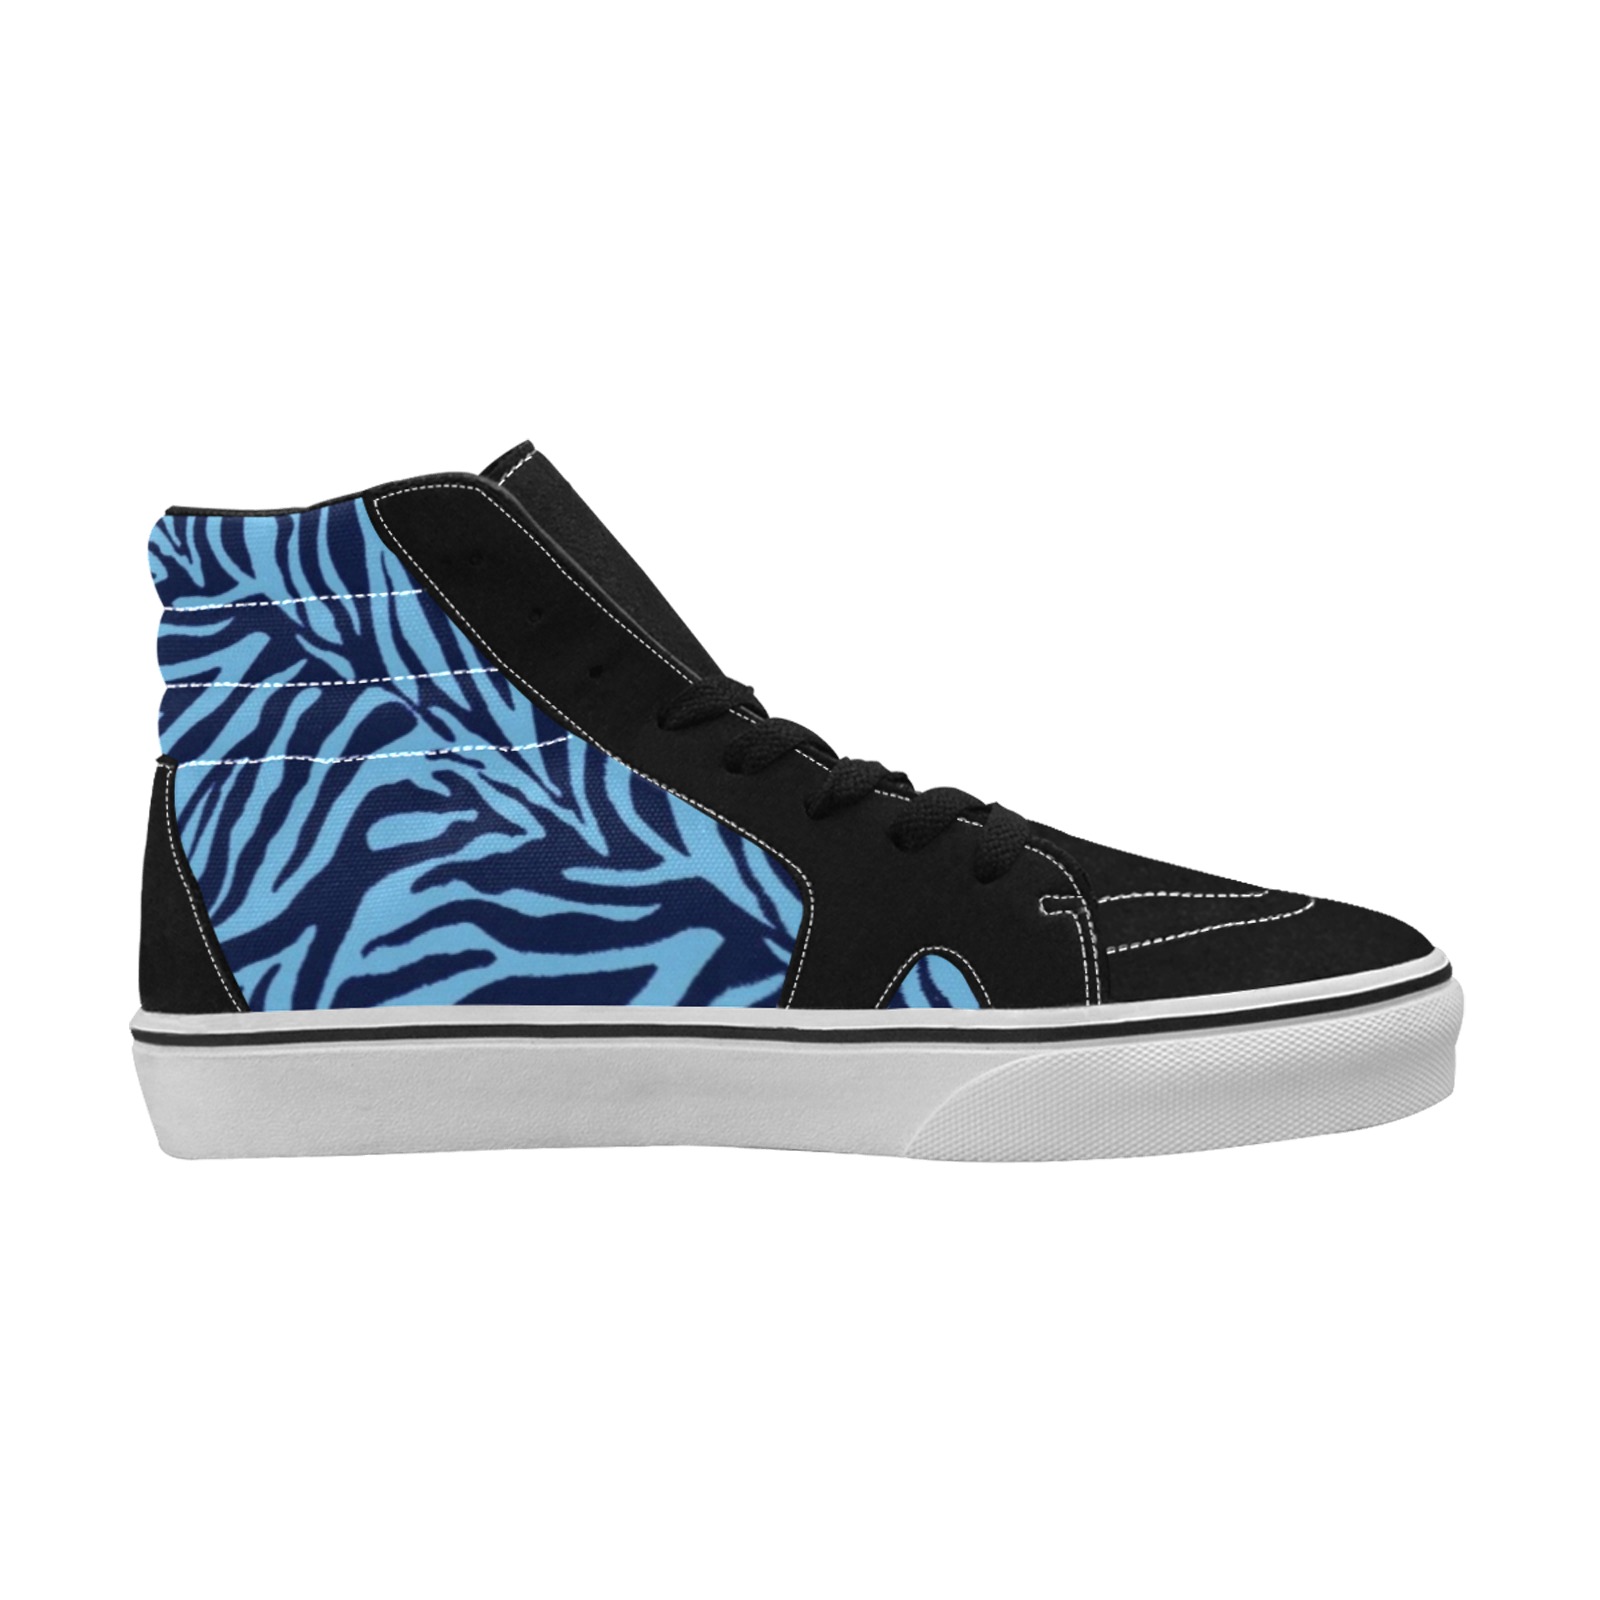 zebra 3 shades of blue Men's High Top Skateboarding Shoes (Model E001-1)